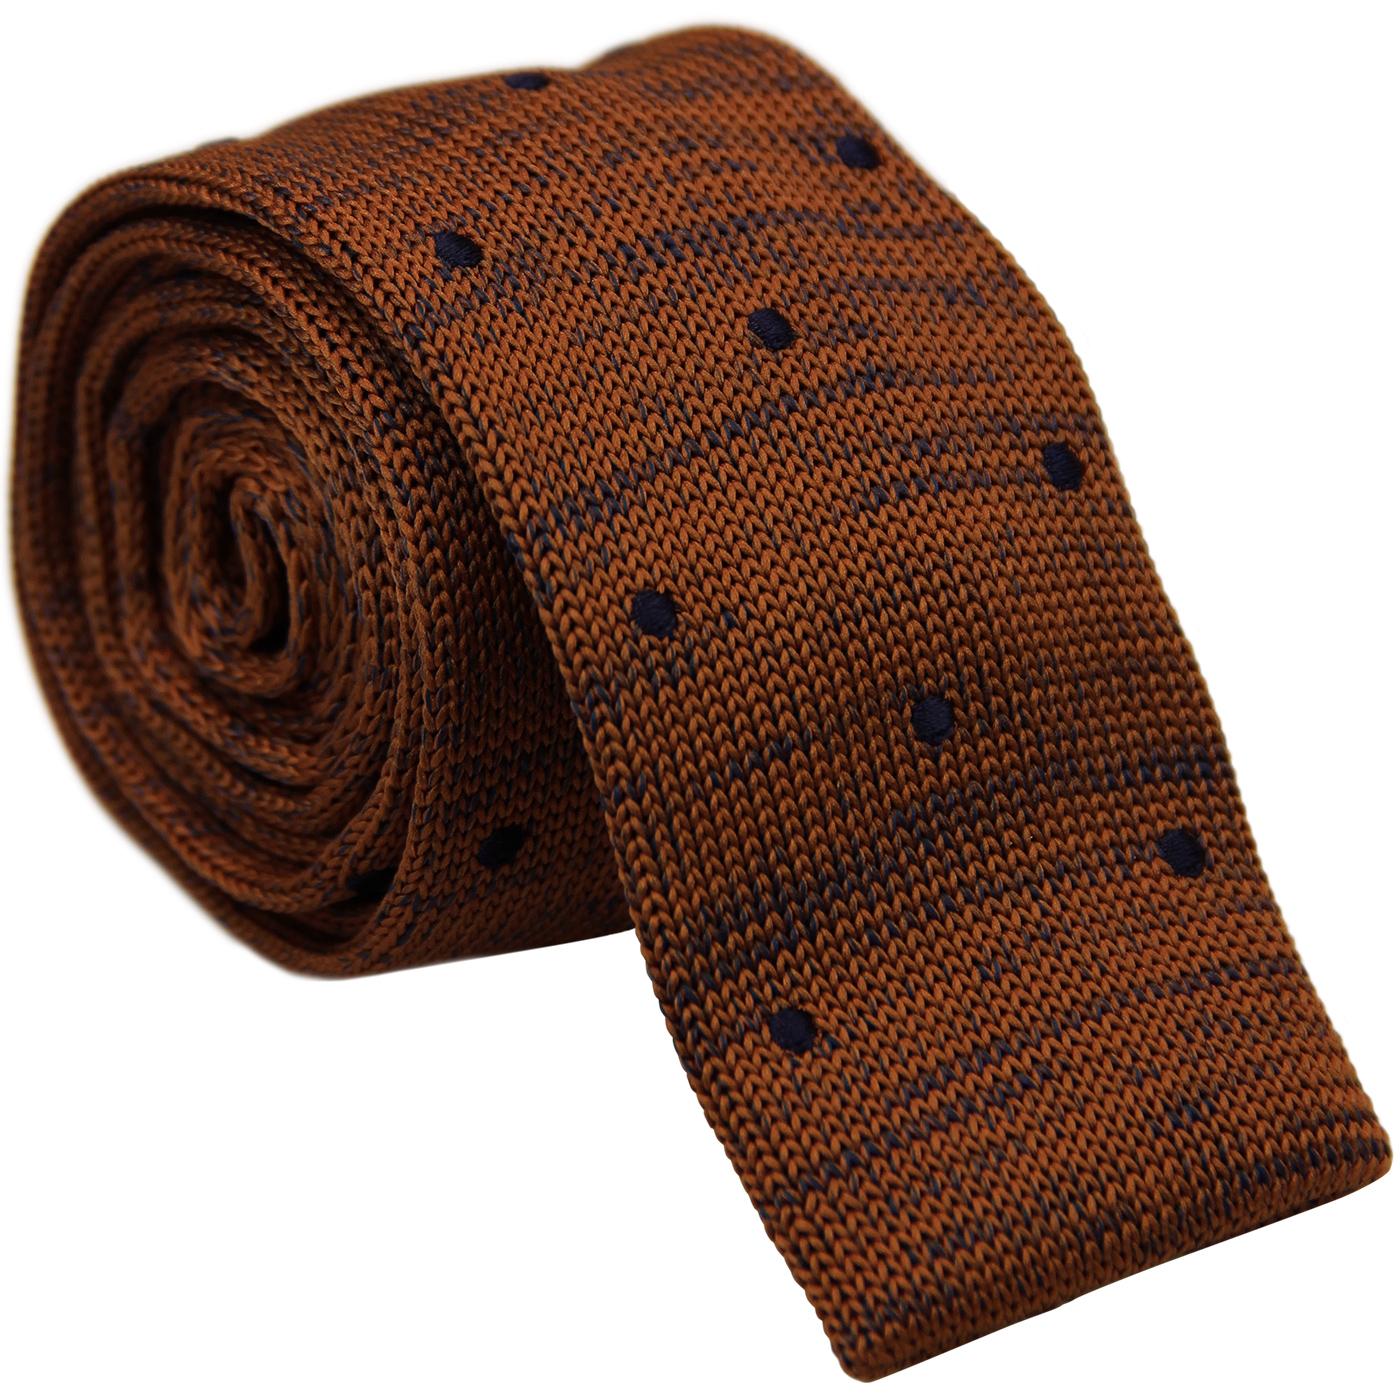 GIBSON LONDON 1960s Mod Spot Knitted Tie (Mustard)